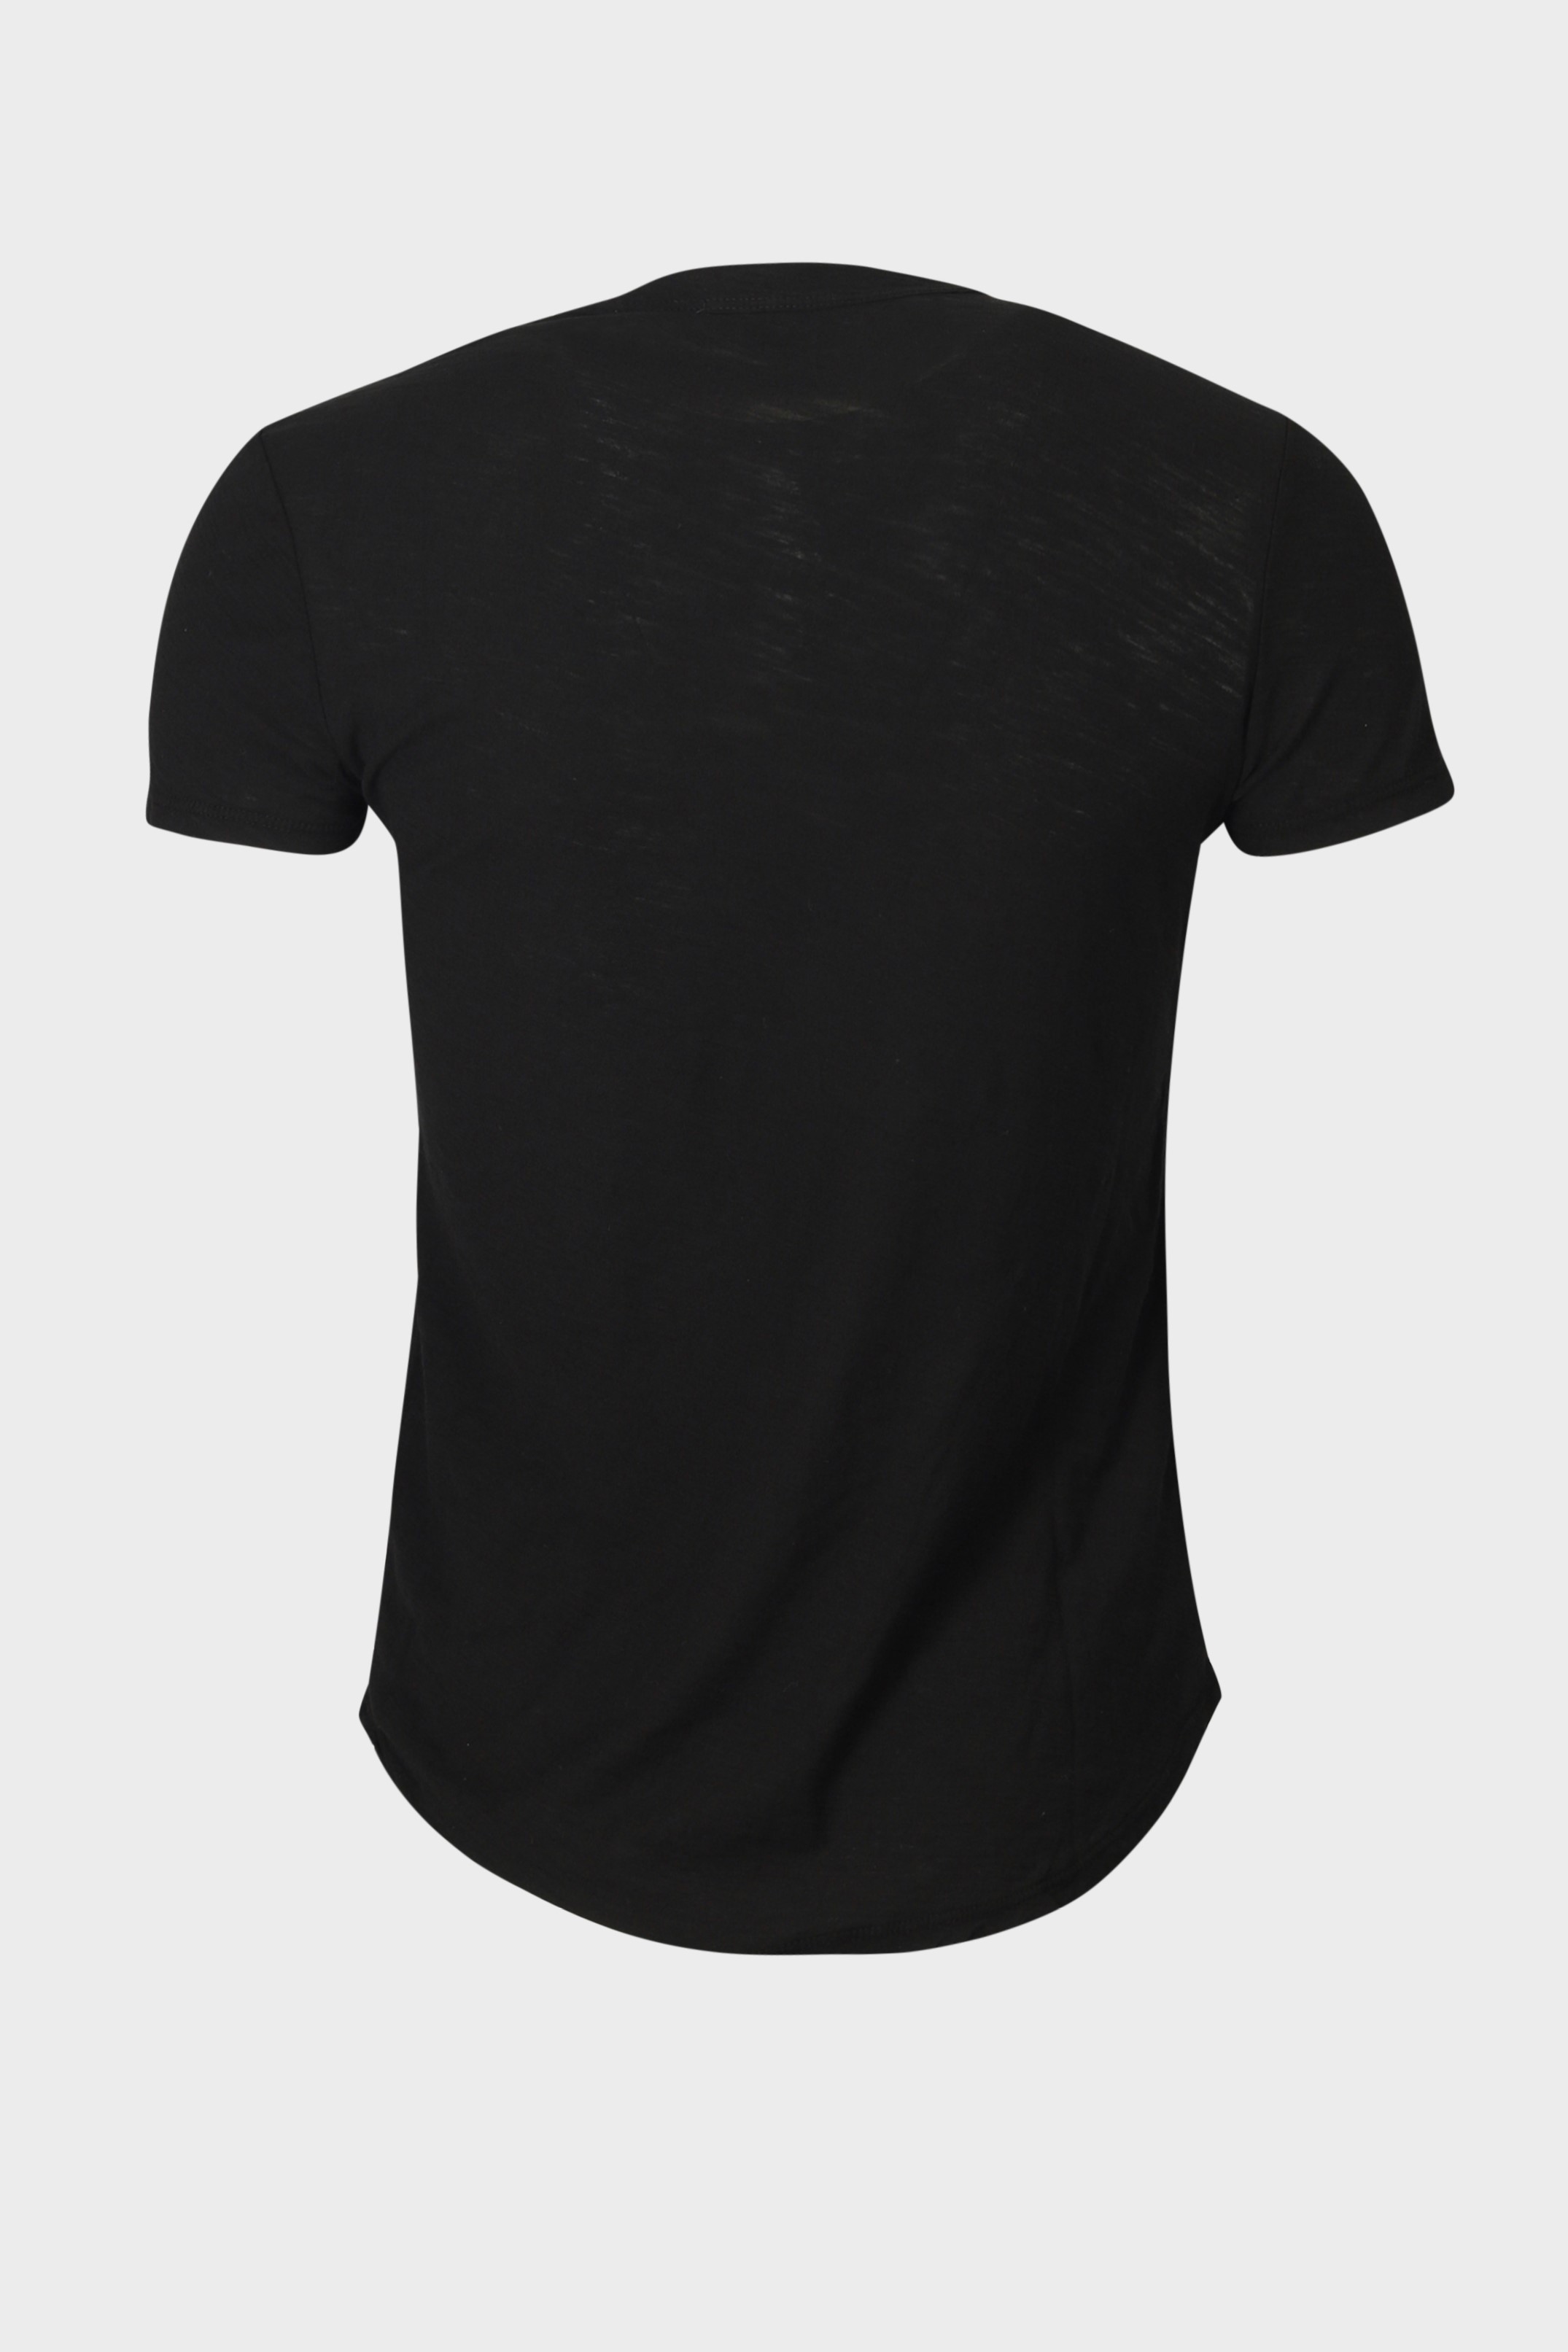 JAMES PERSE Sheer Slub Crew Neck T-Shirt in Black 0/XS